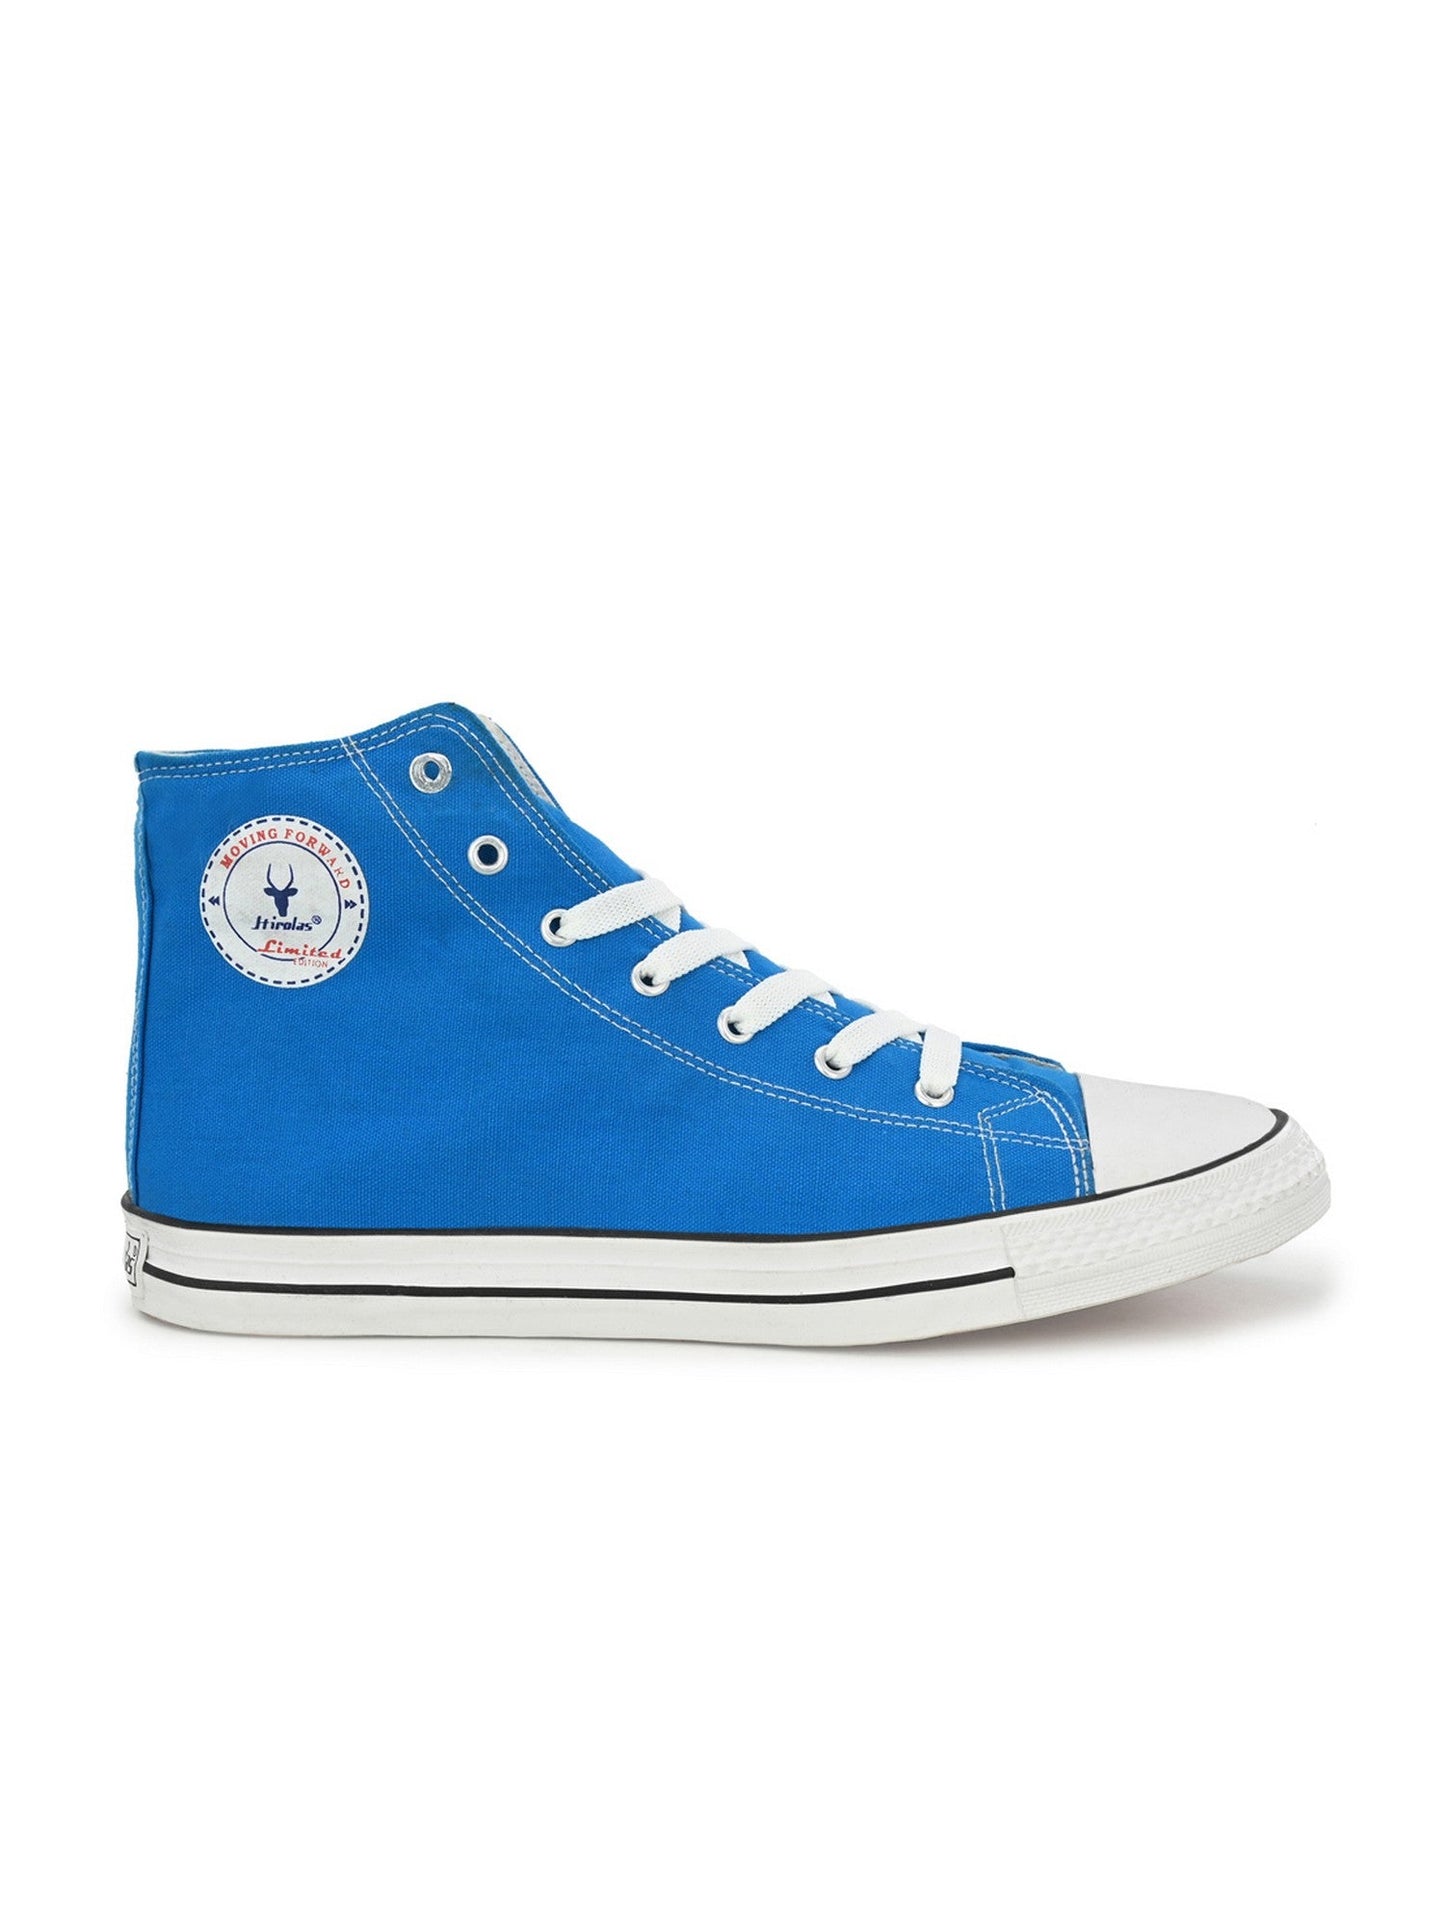 Hirolas® Men's Sky Blue Canvas Vulcansied Skateboard Lace Up Ankle Length Sneaker Shoes (HRL2077SBU)